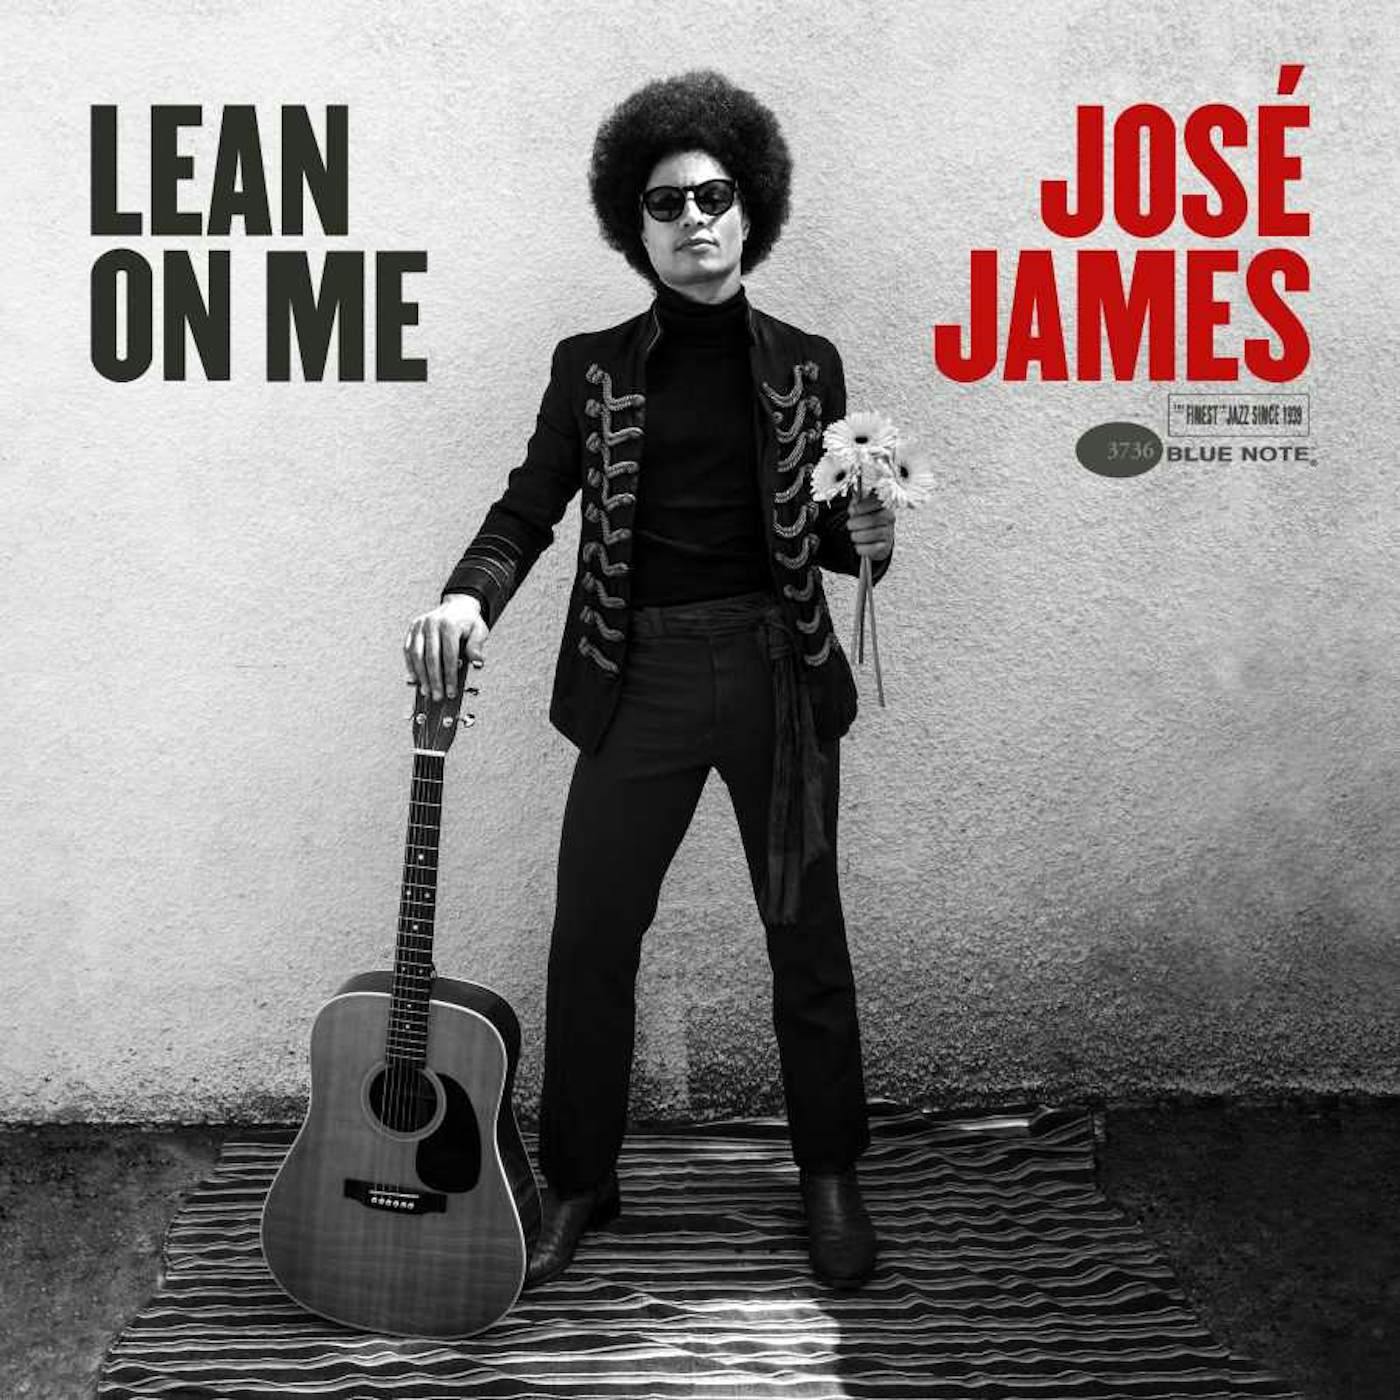 Jose James Lean On Me Vinyl Record